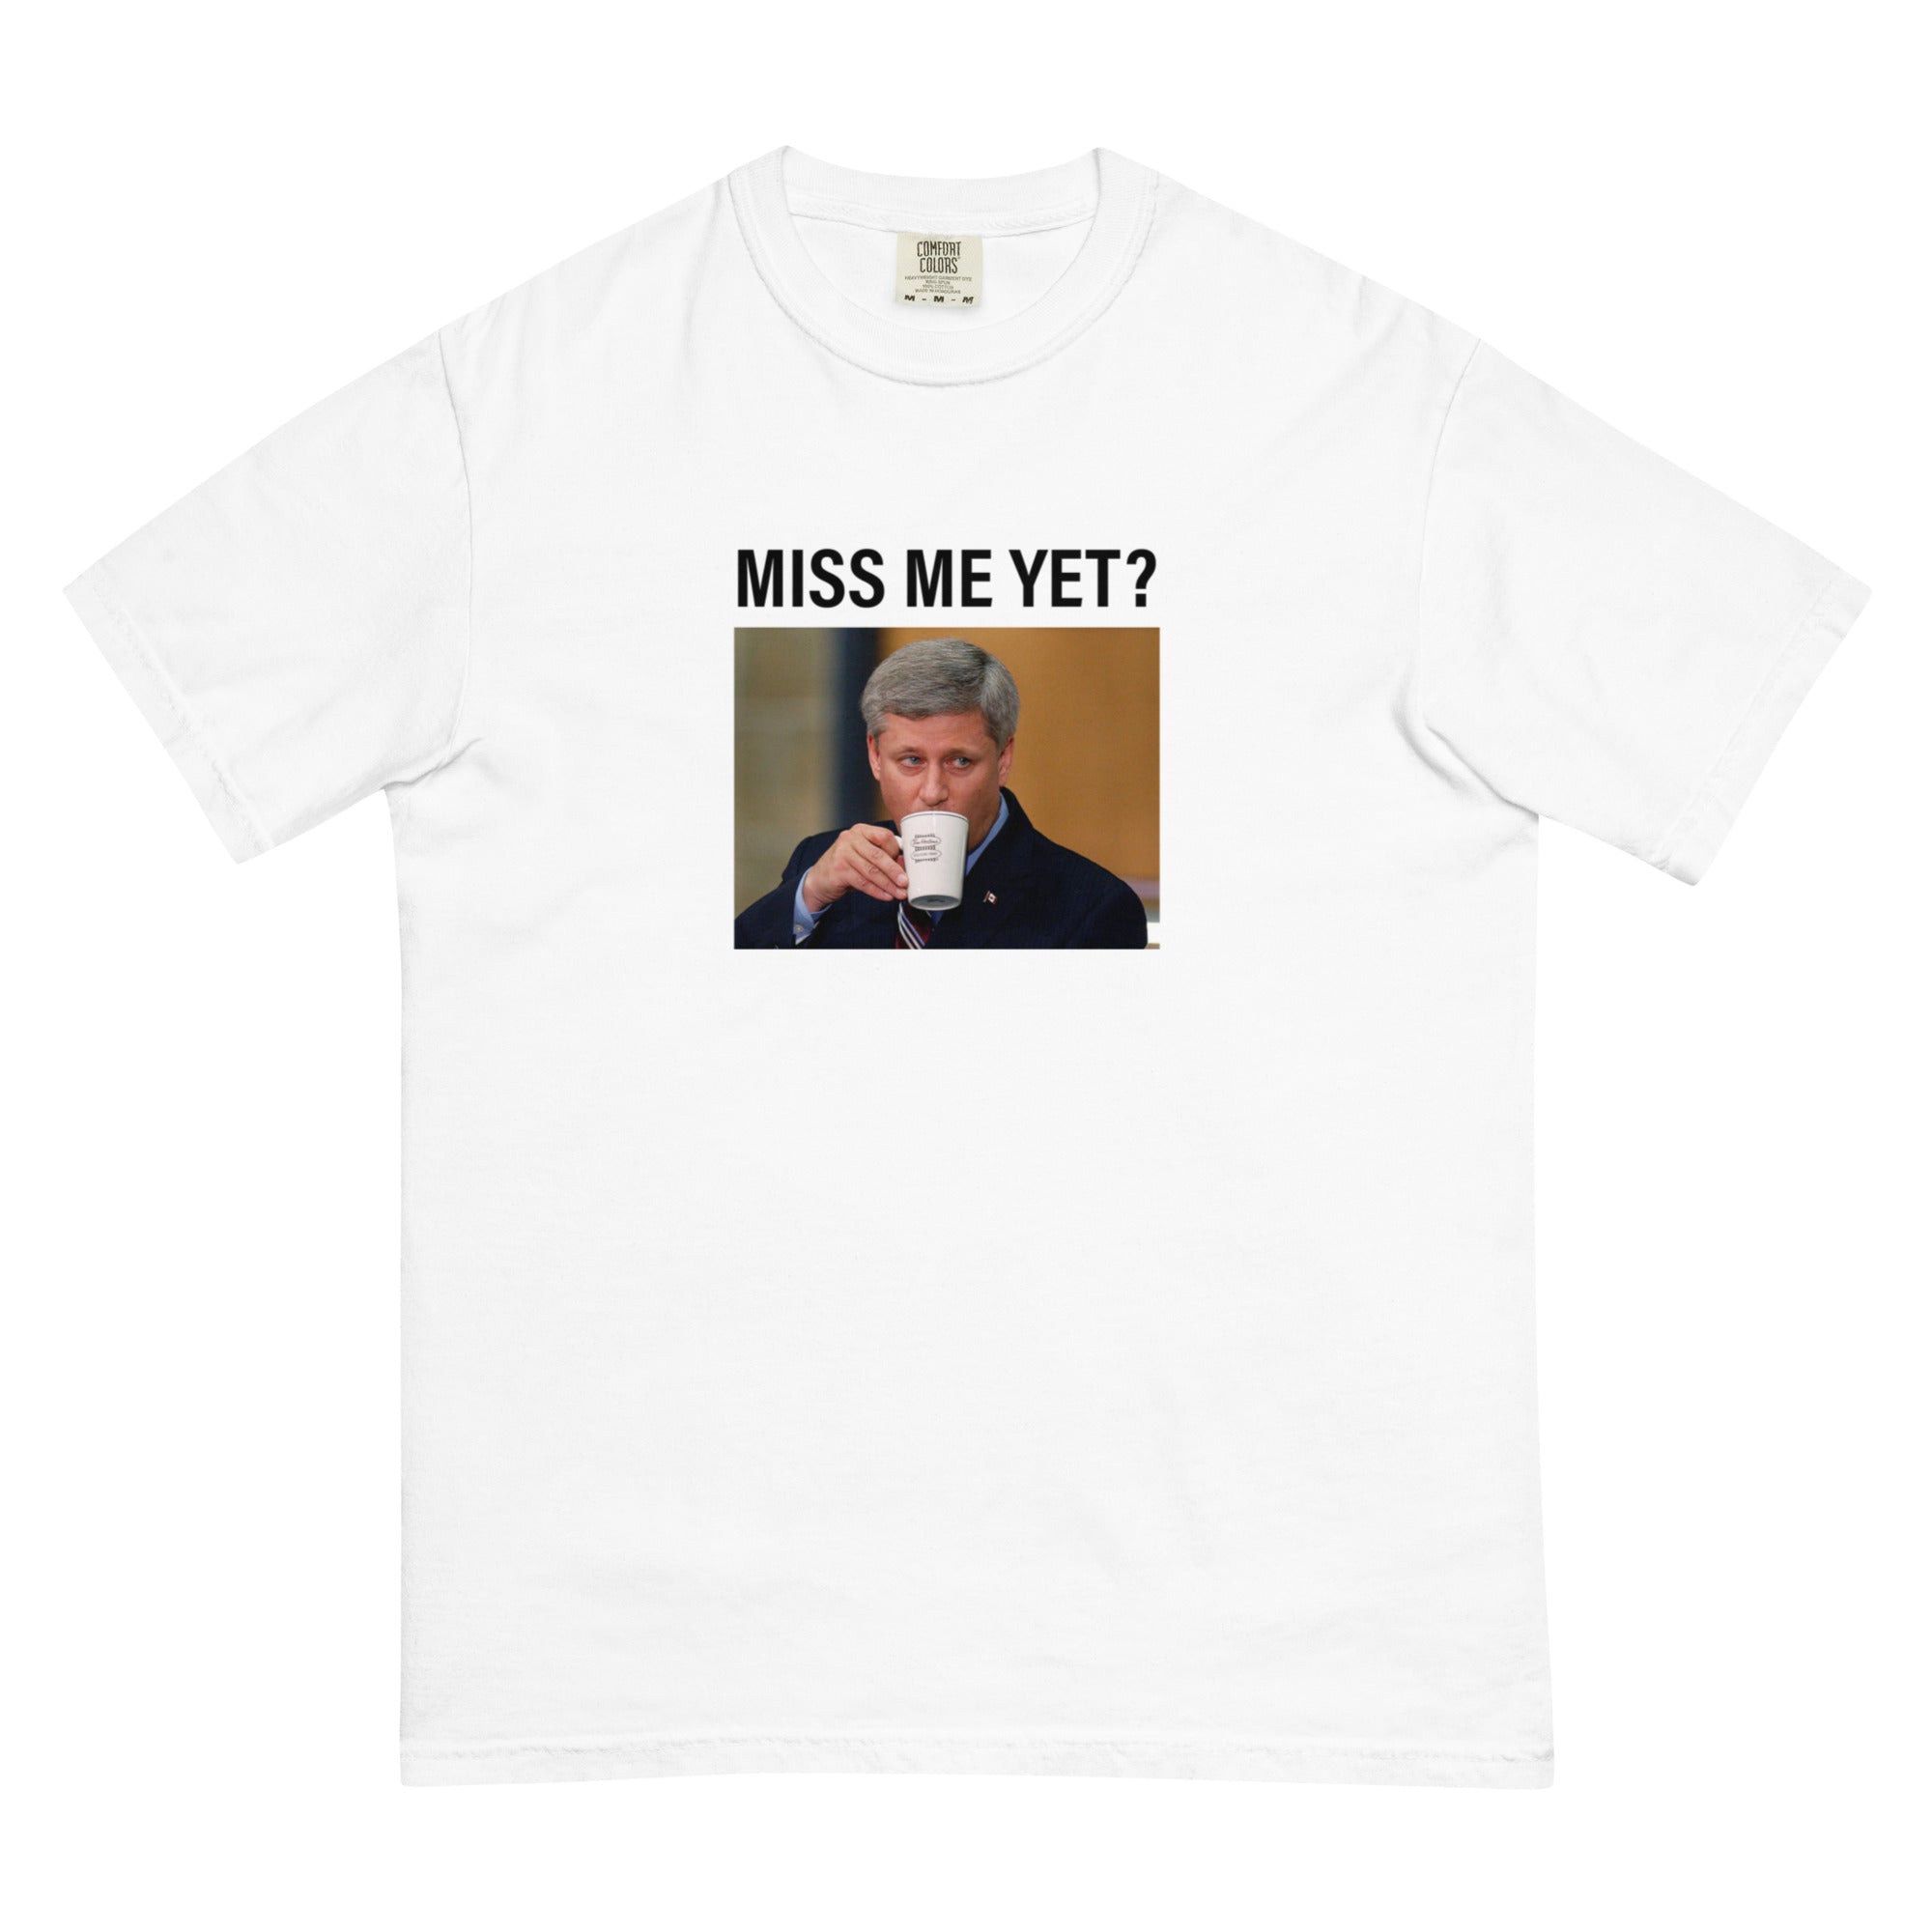 Men's "Miss Me Yet? T-shirt